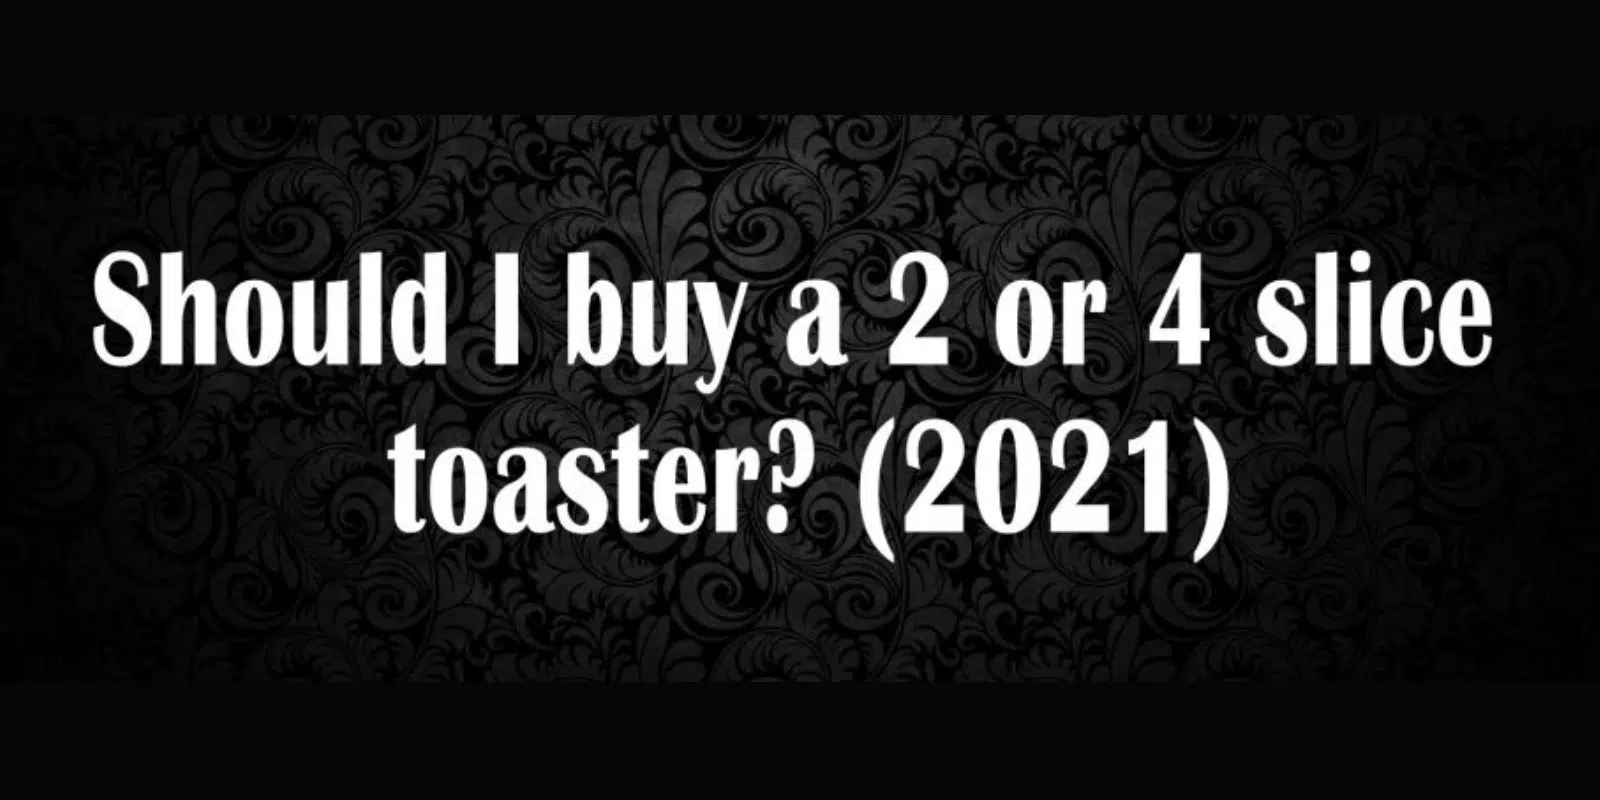 Should I buy a 2 or 4 slice toaster? (2022)